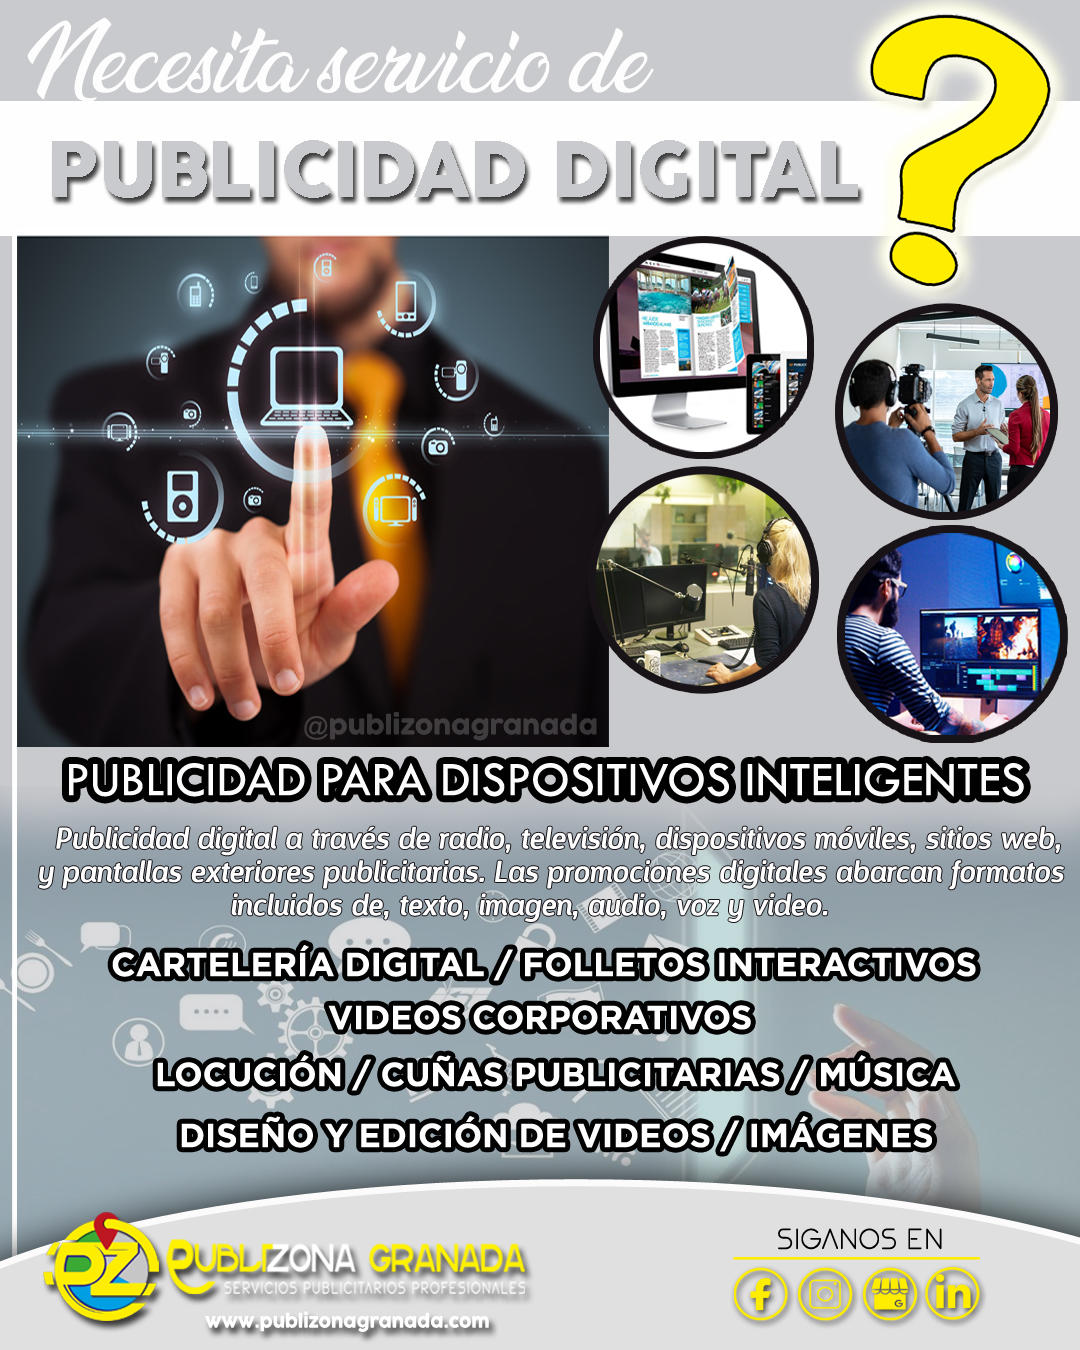 Images Publizona Granada servicios publicitarios profesionales